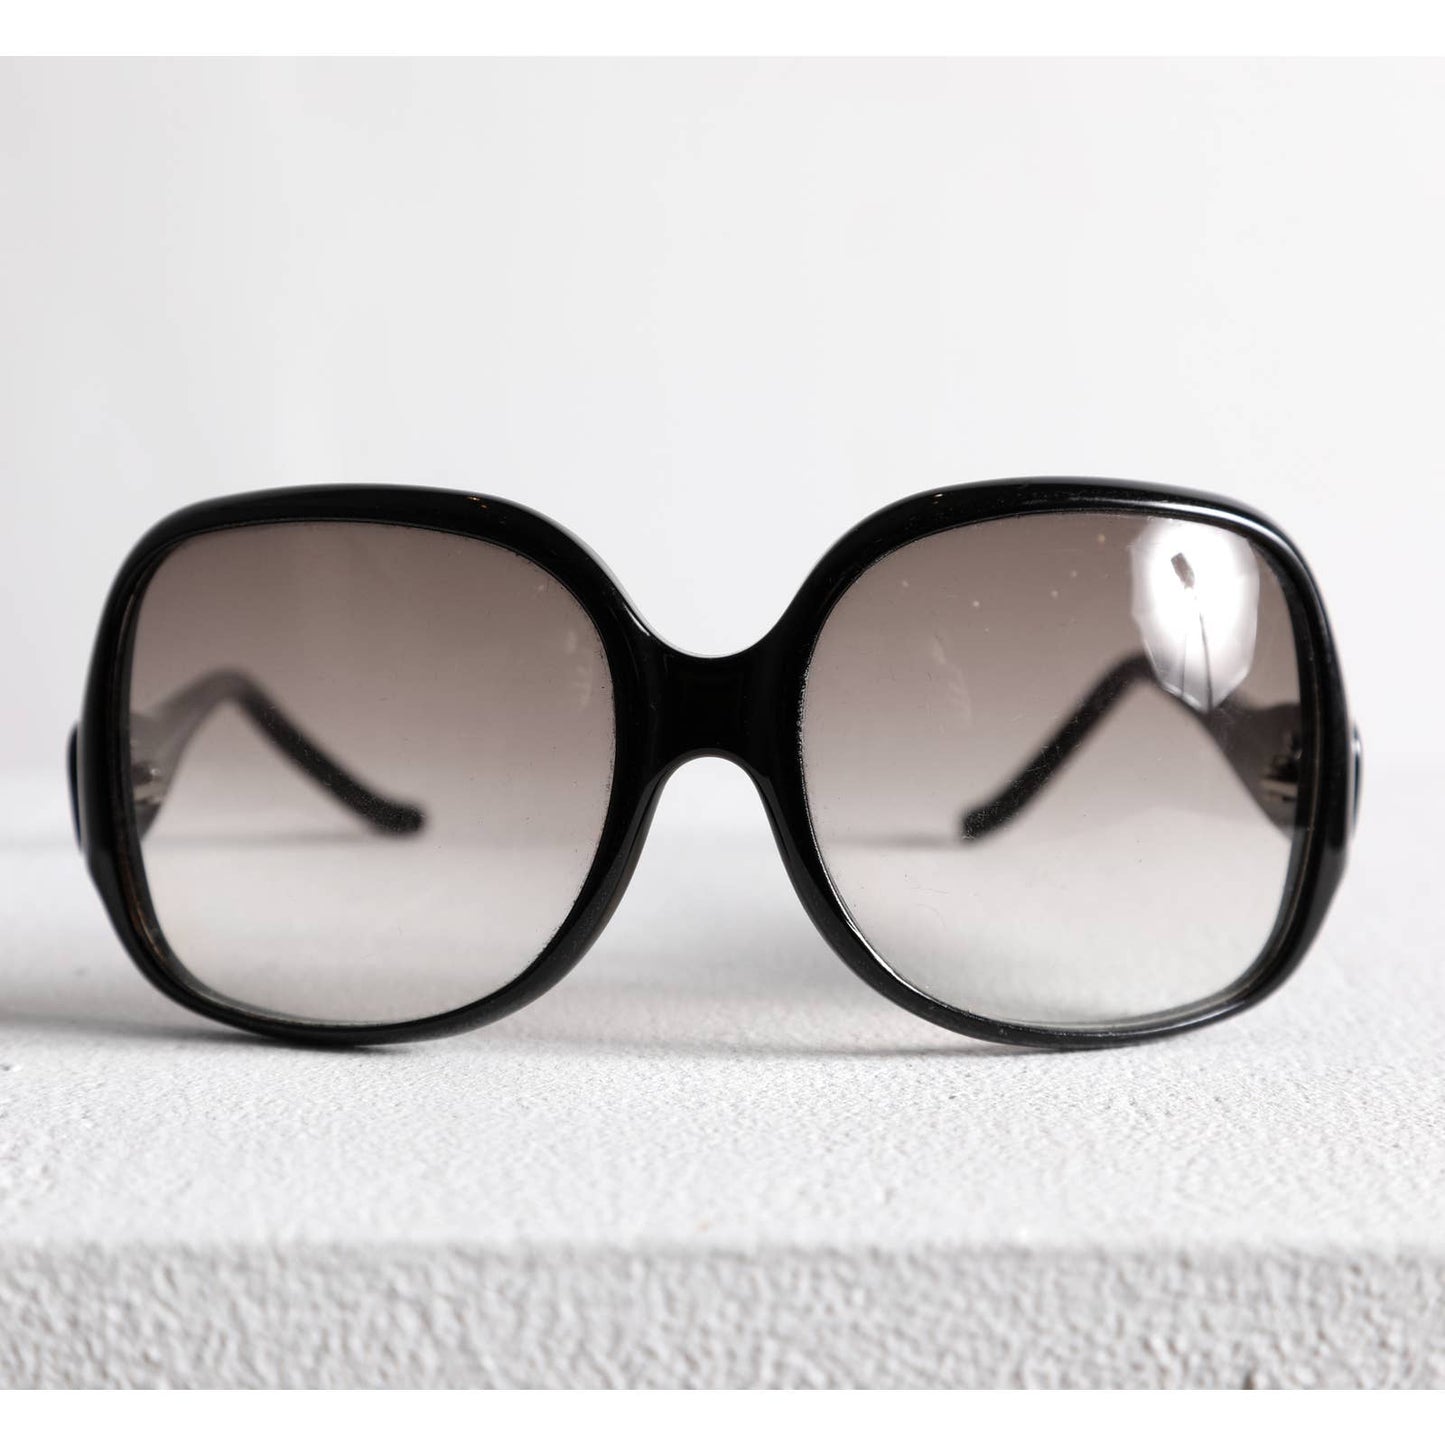 BALENCIAGA Black Framed Retro Style Sunglasses